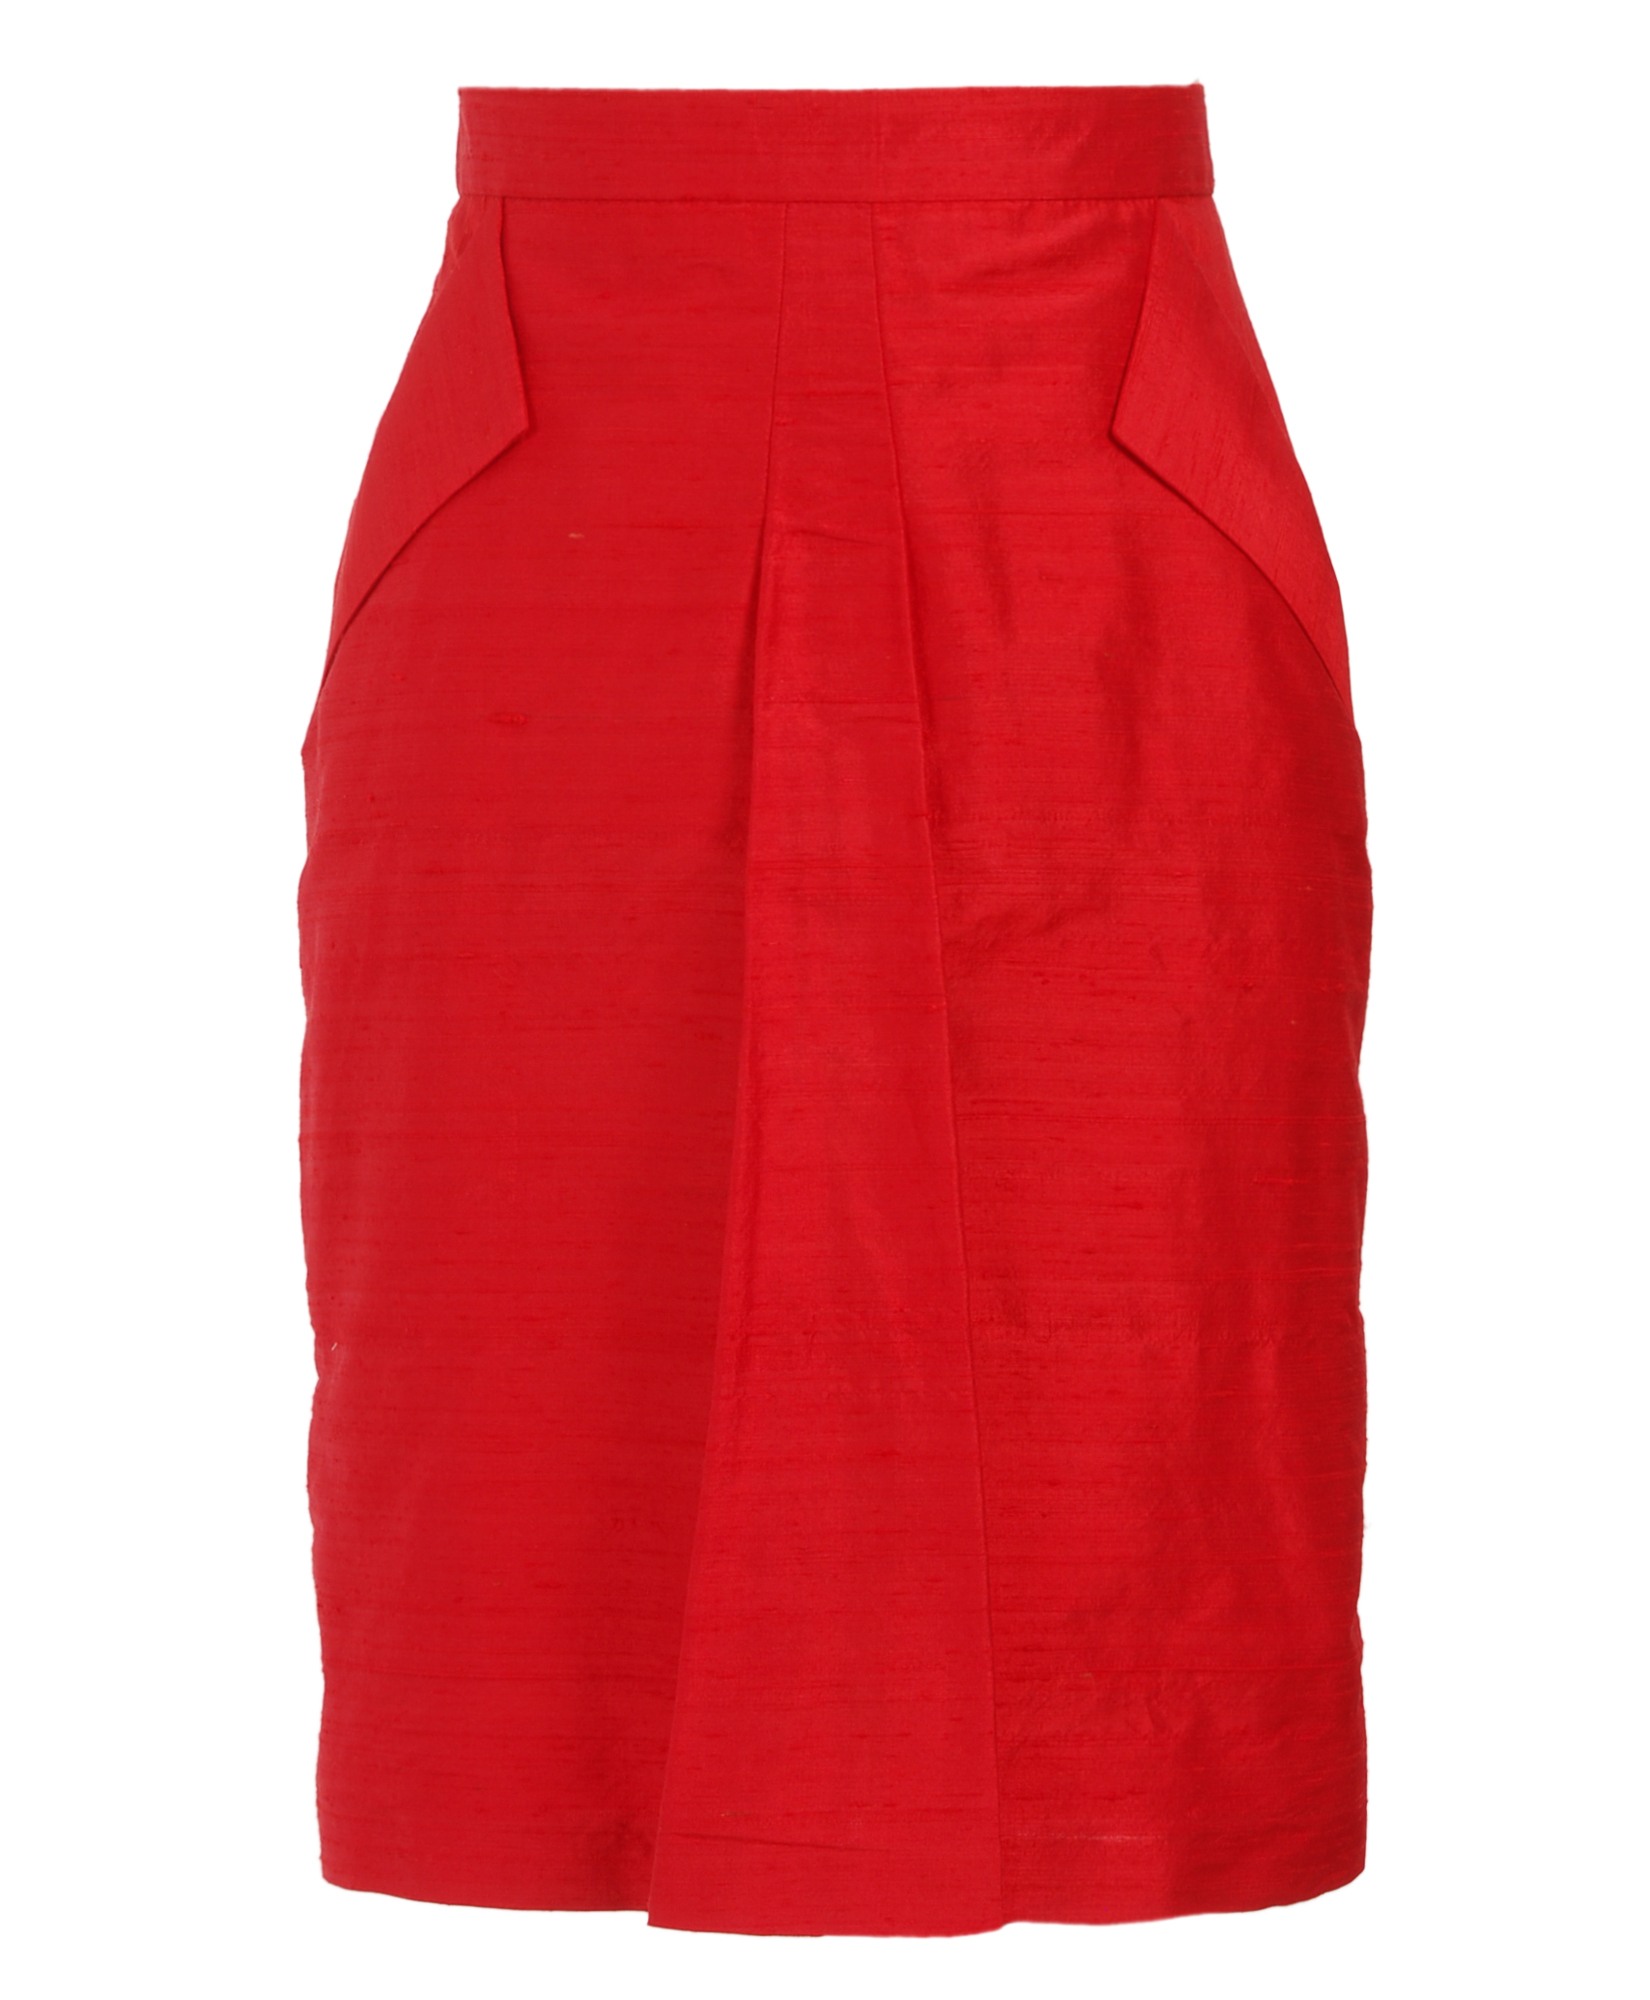 L'wren Scott Dupioni Silk Skirt in Red | Lyst